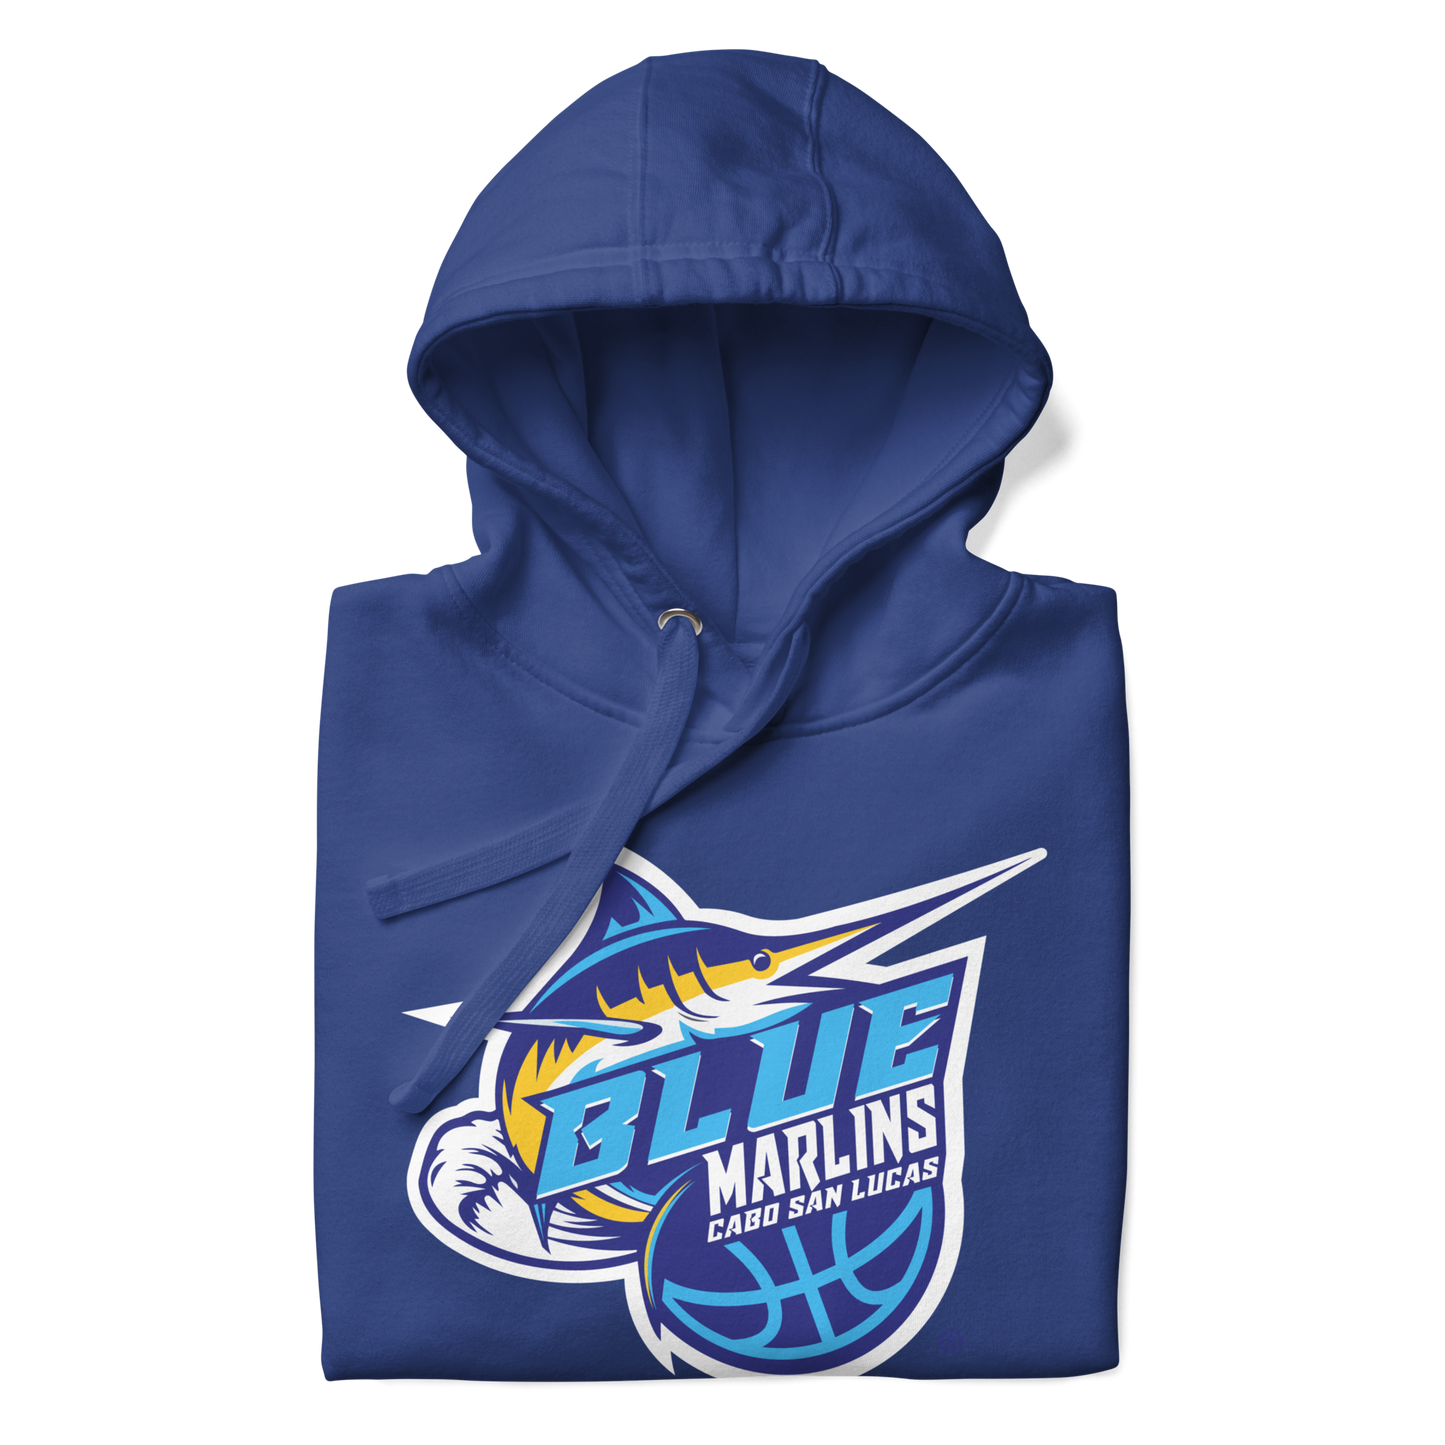 'The Blue' Marlins Basketball Team Fan Hoodie